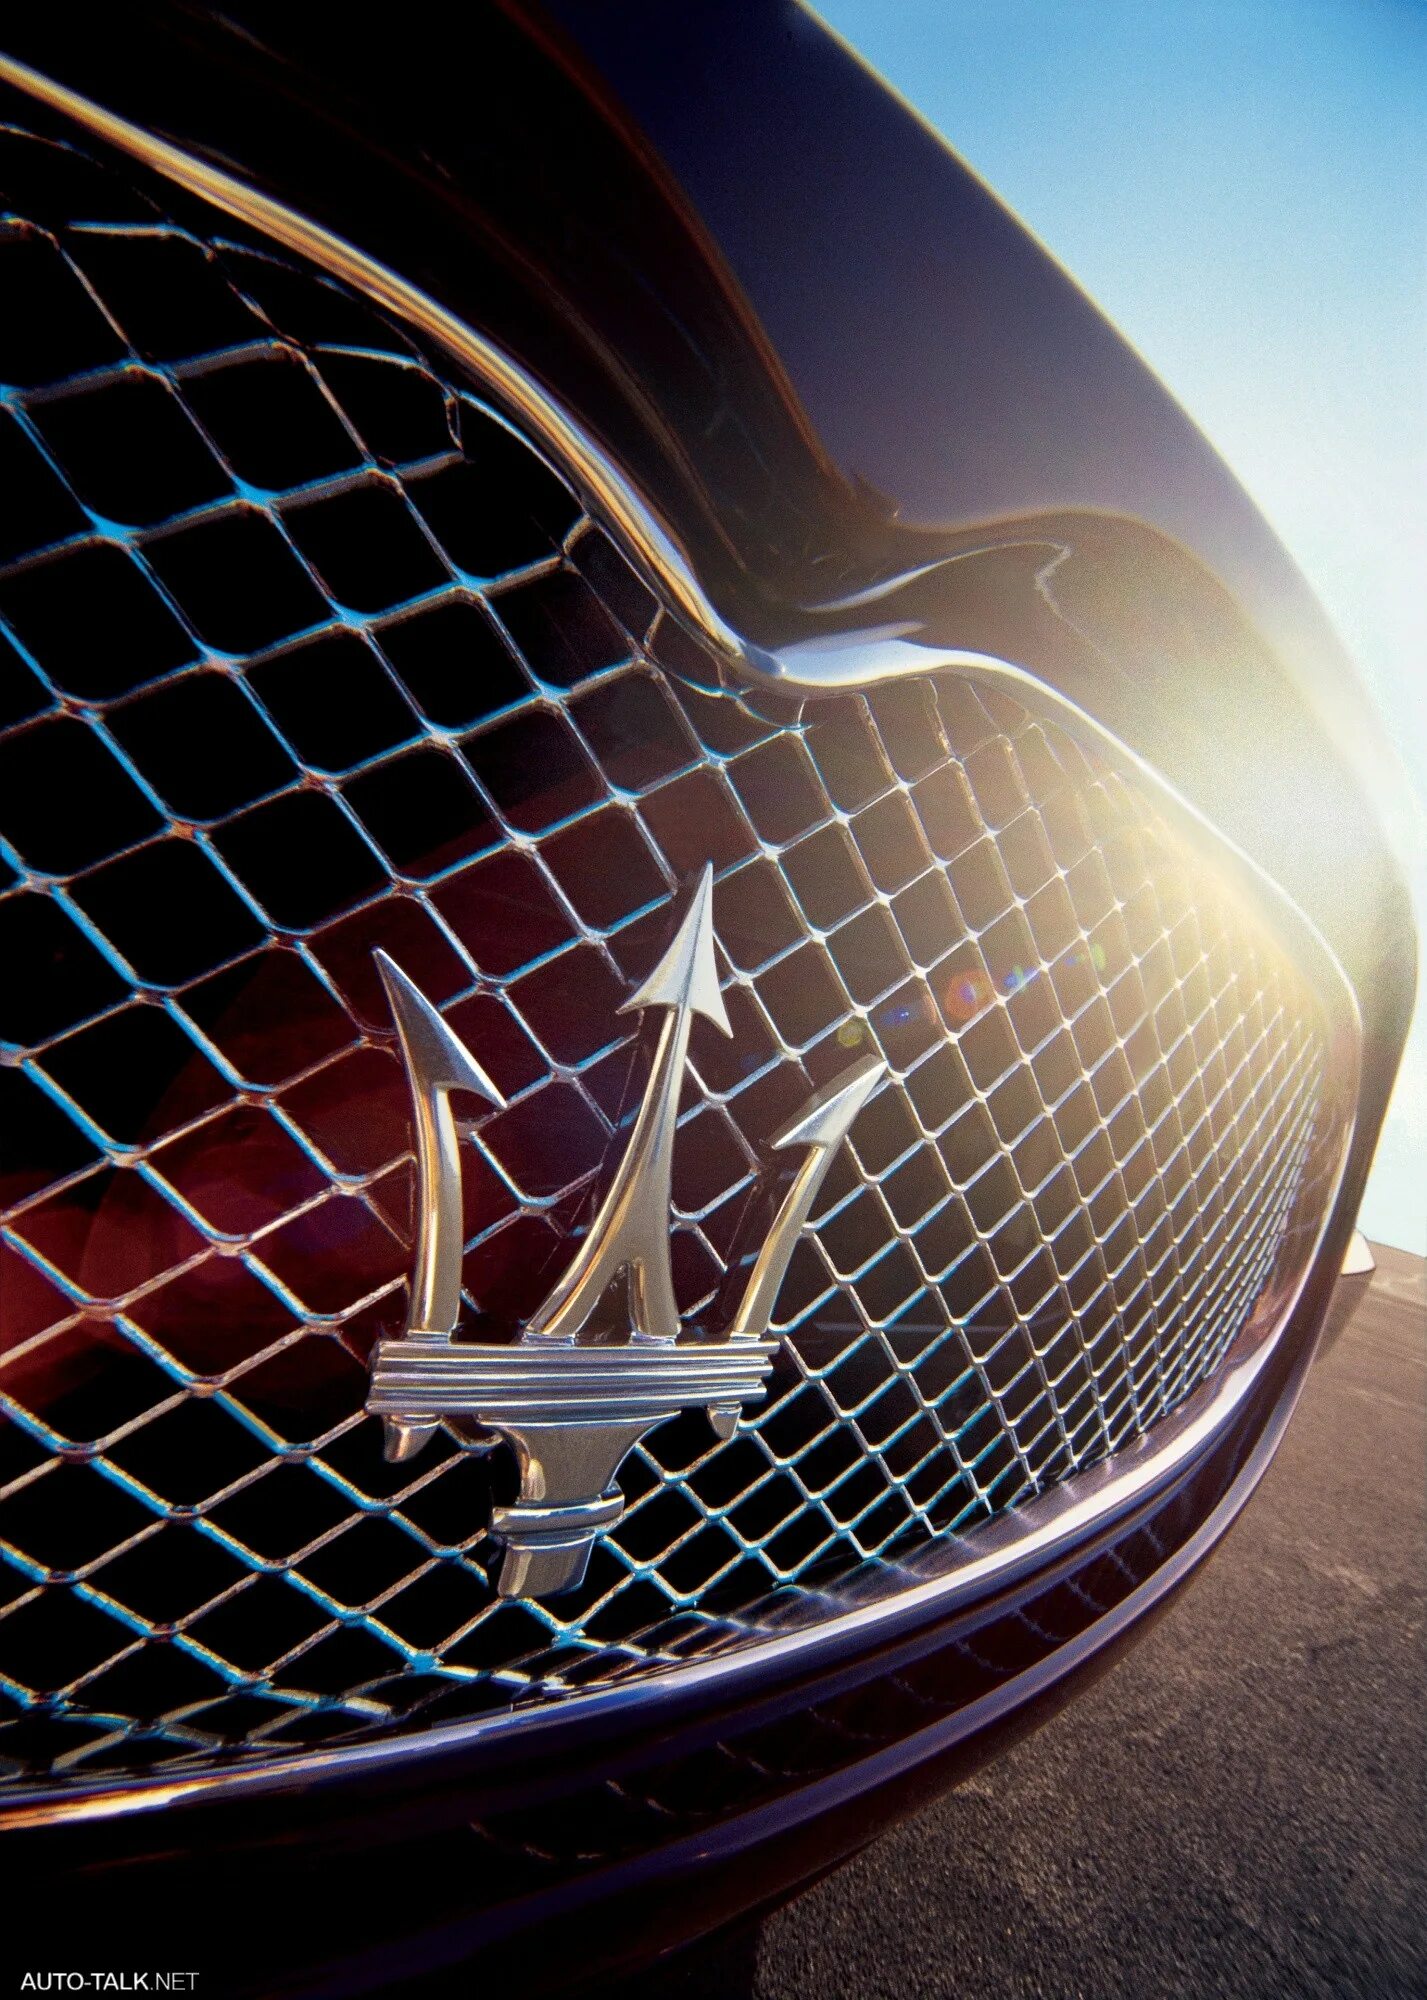 Maserati Quattroporte Executive gt. Значок Мазератти. Марка машины с трезубцем. Эмблема автомобиля Мазерати. Машина знак трезубец